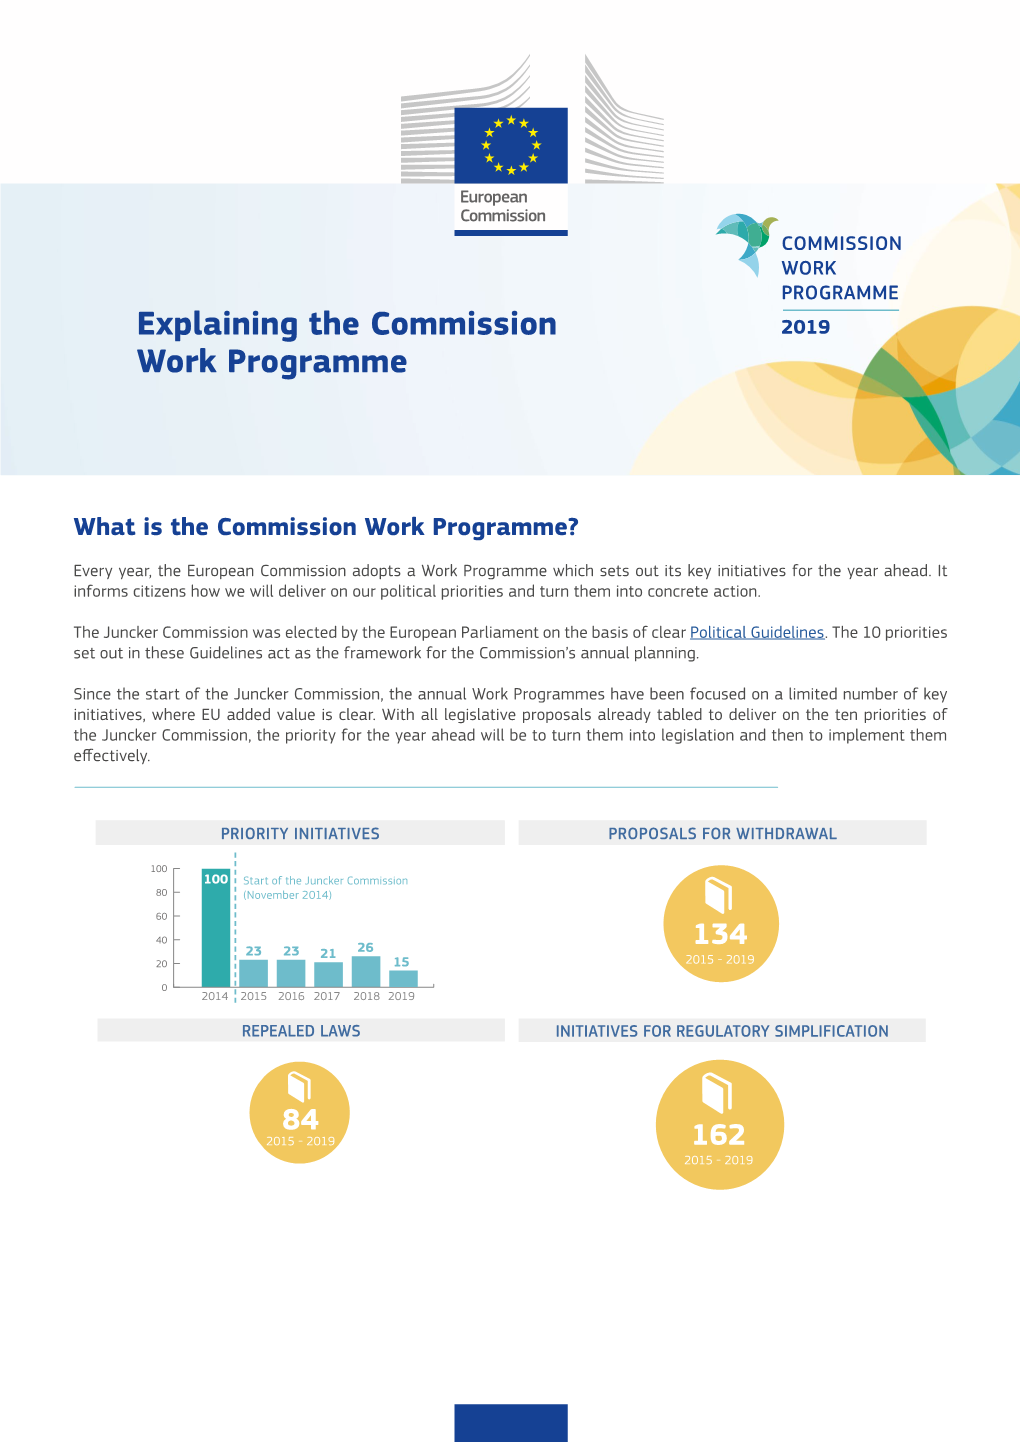 Explaining the Commission Work Programme